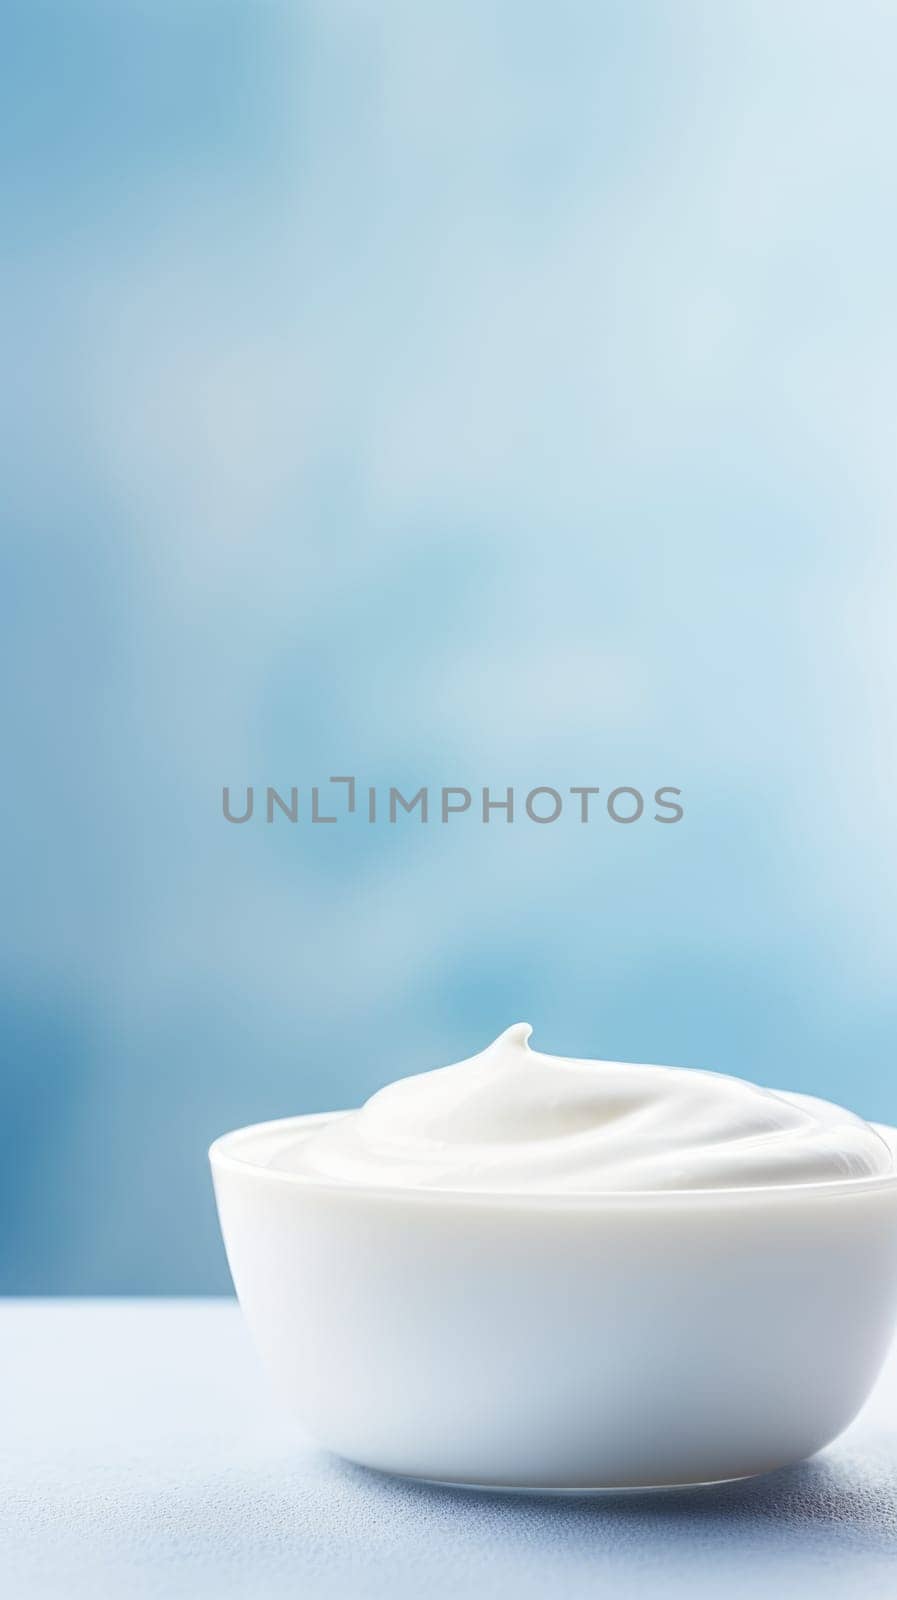 A bowl of yogurt on a blue background